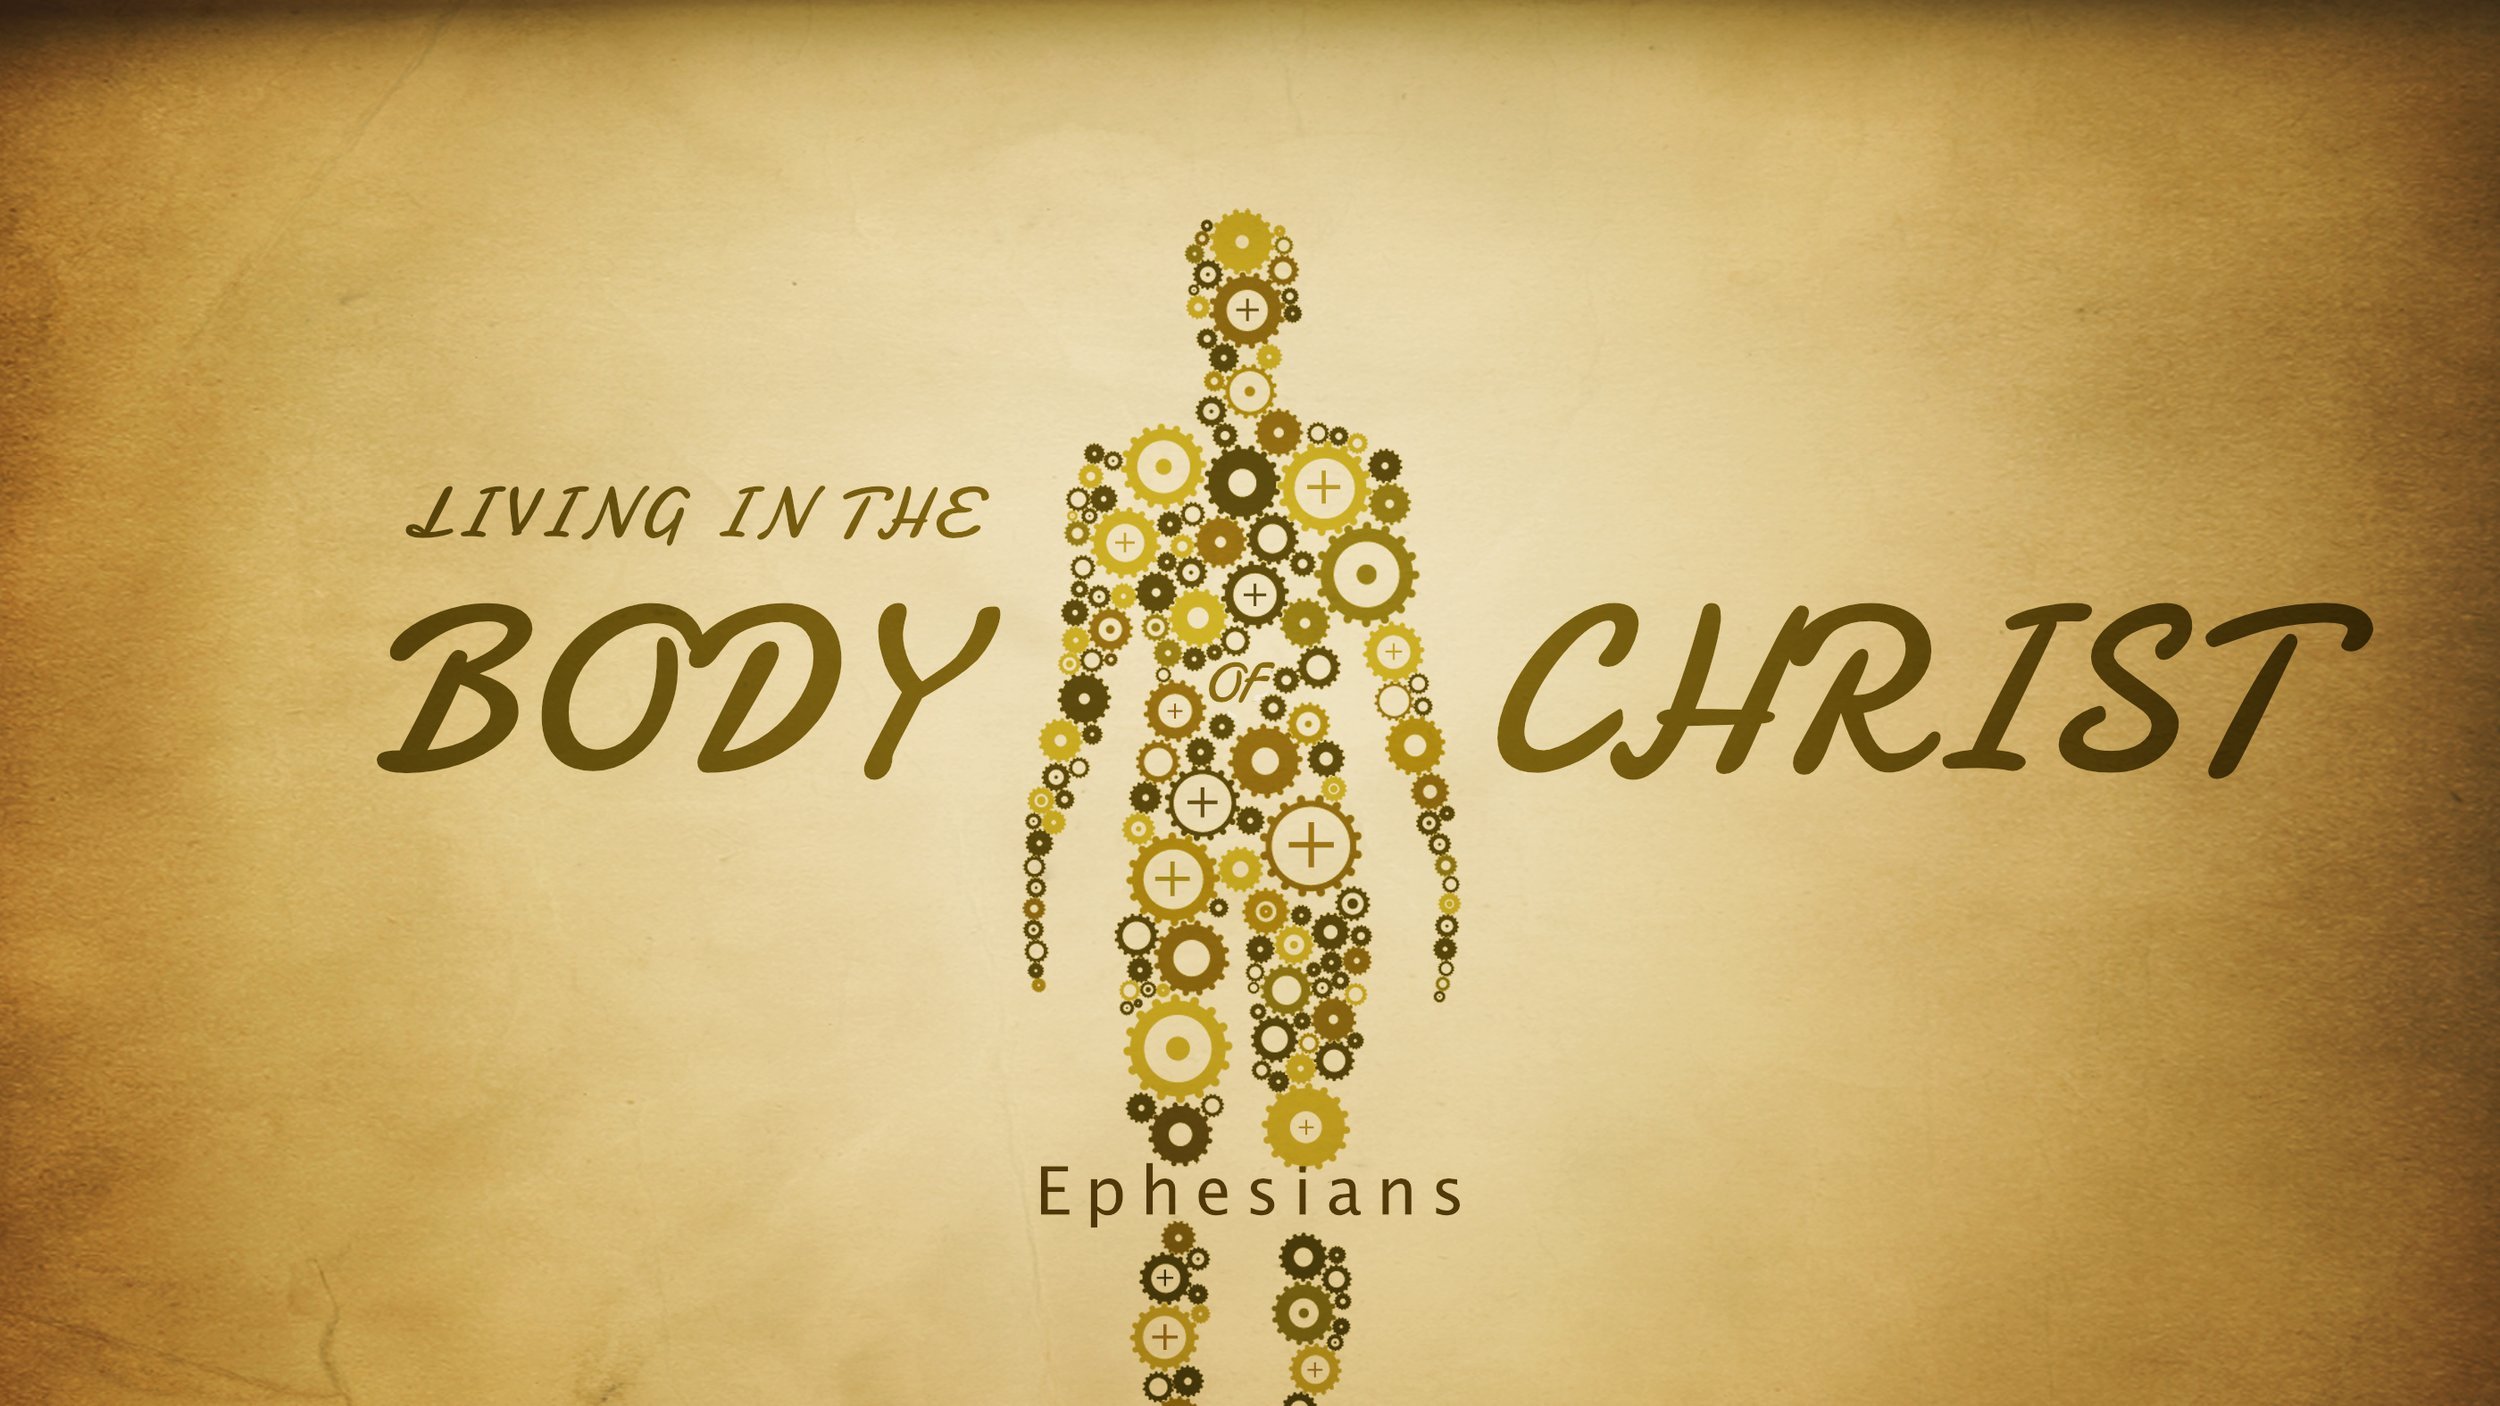 22.1.16p - Ephesians - Living In The Body - Title.jpg